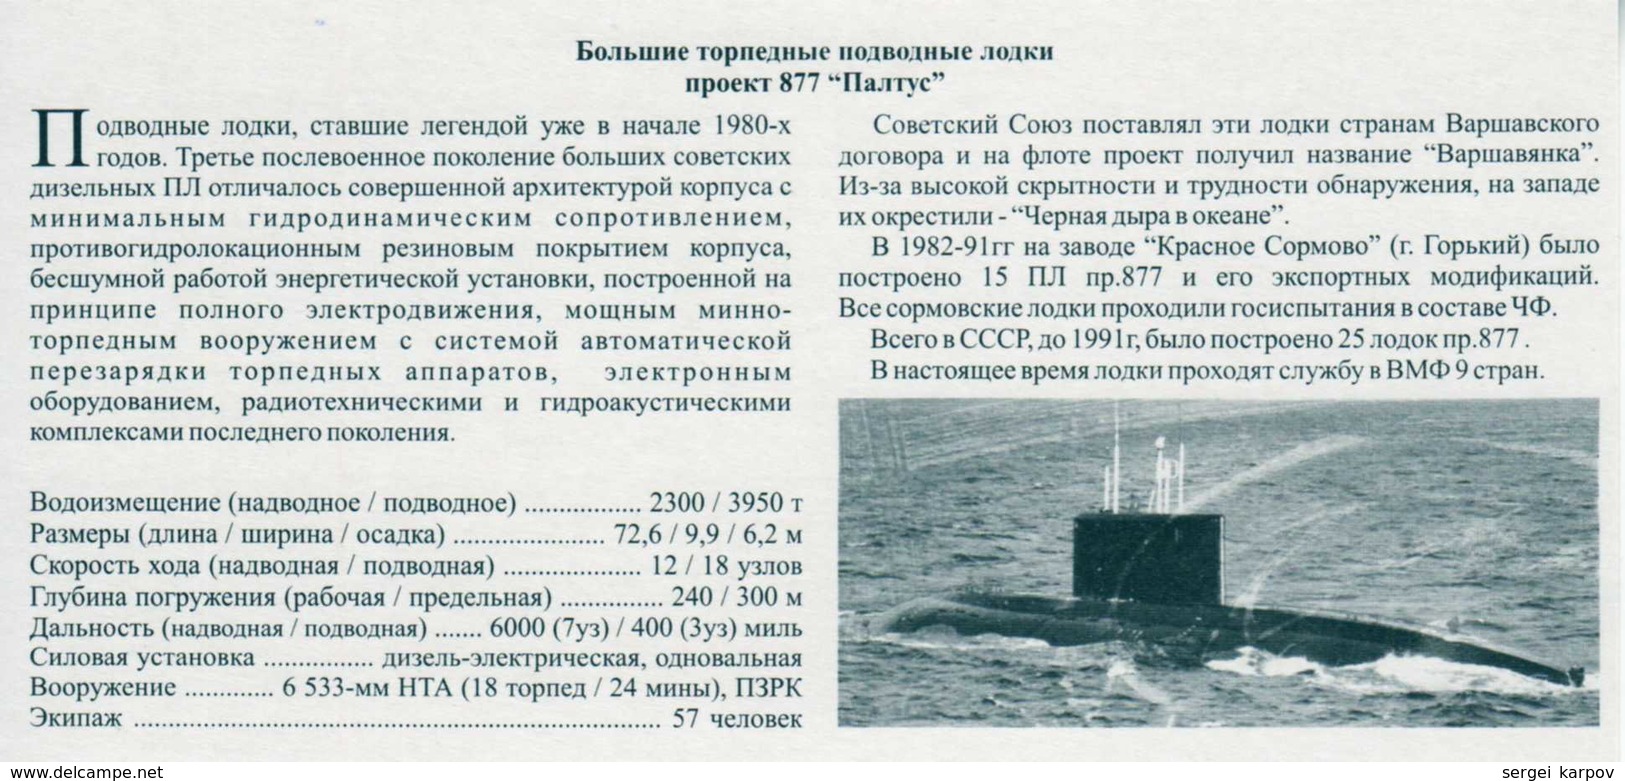 Soviet Black Sea Fleet submarines (1951-1991).